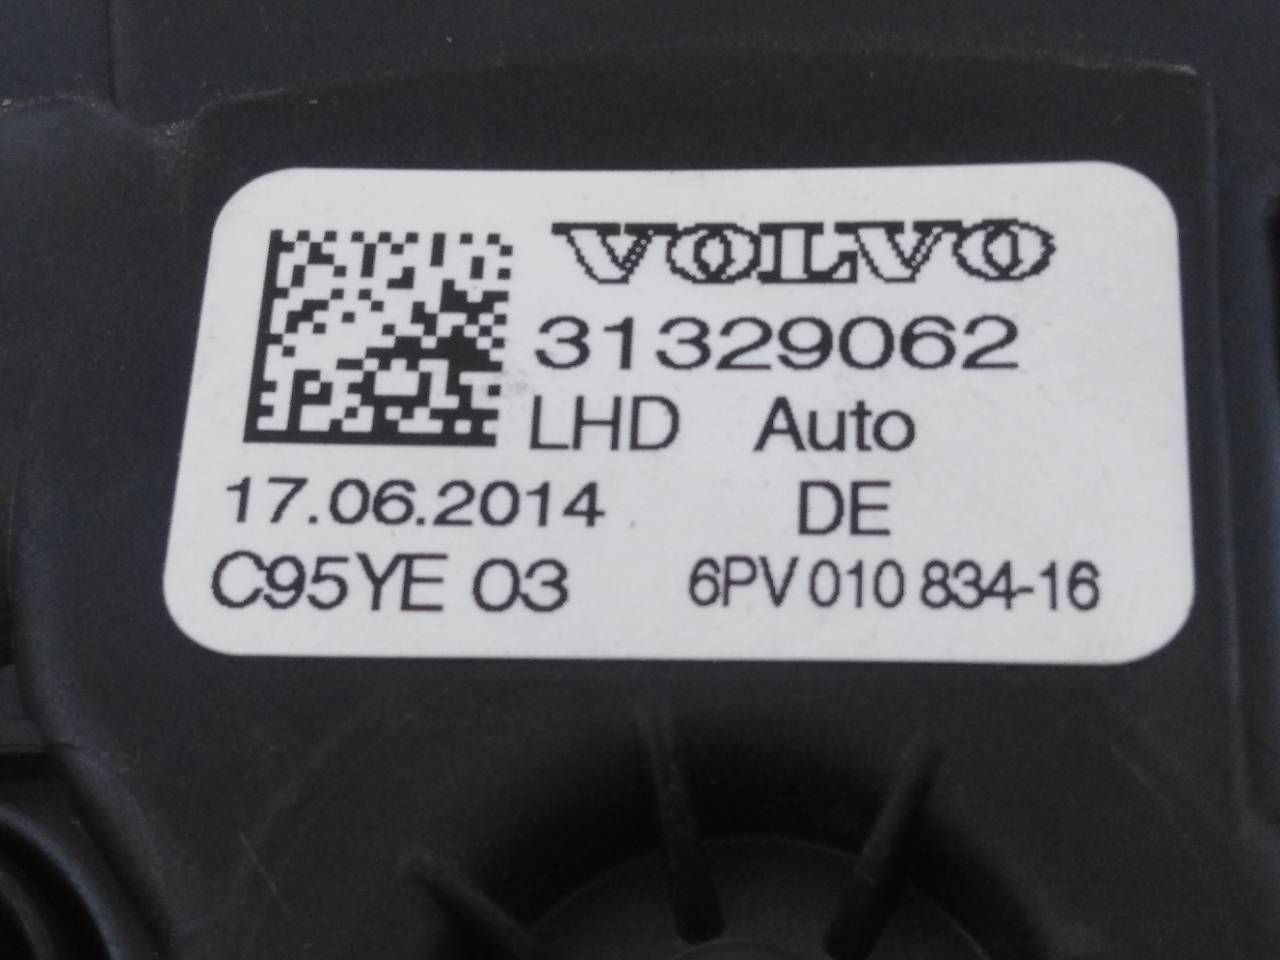 VOLVO V60 1 generation (2010-2020) Throttle Pedal 6PV01083416, 31329062, E3-B5-35-4 18713125